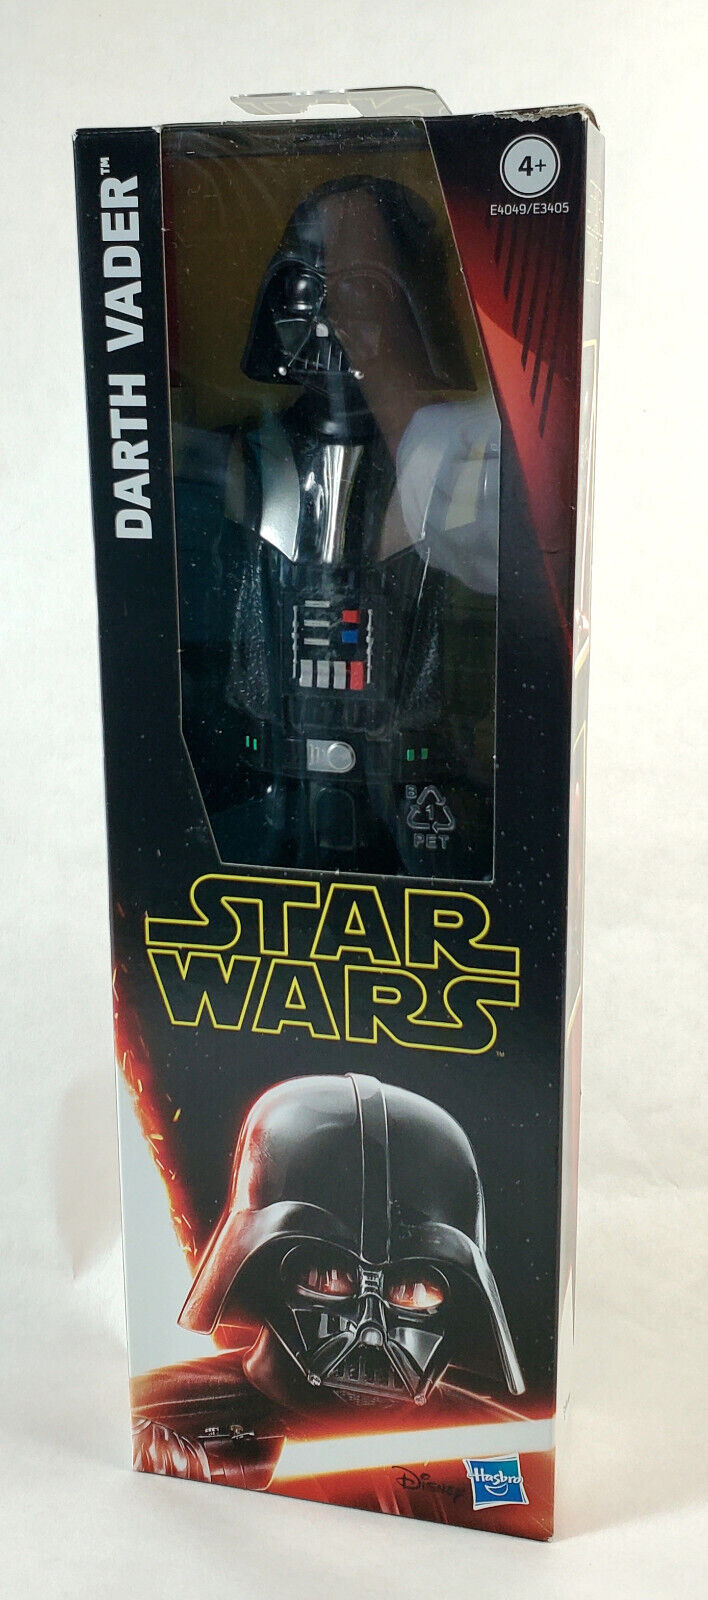 Star Wars Revenge Of The Sith - Darth Vader Hasbro 12-inch Action Figure Toy Hasbro E4049